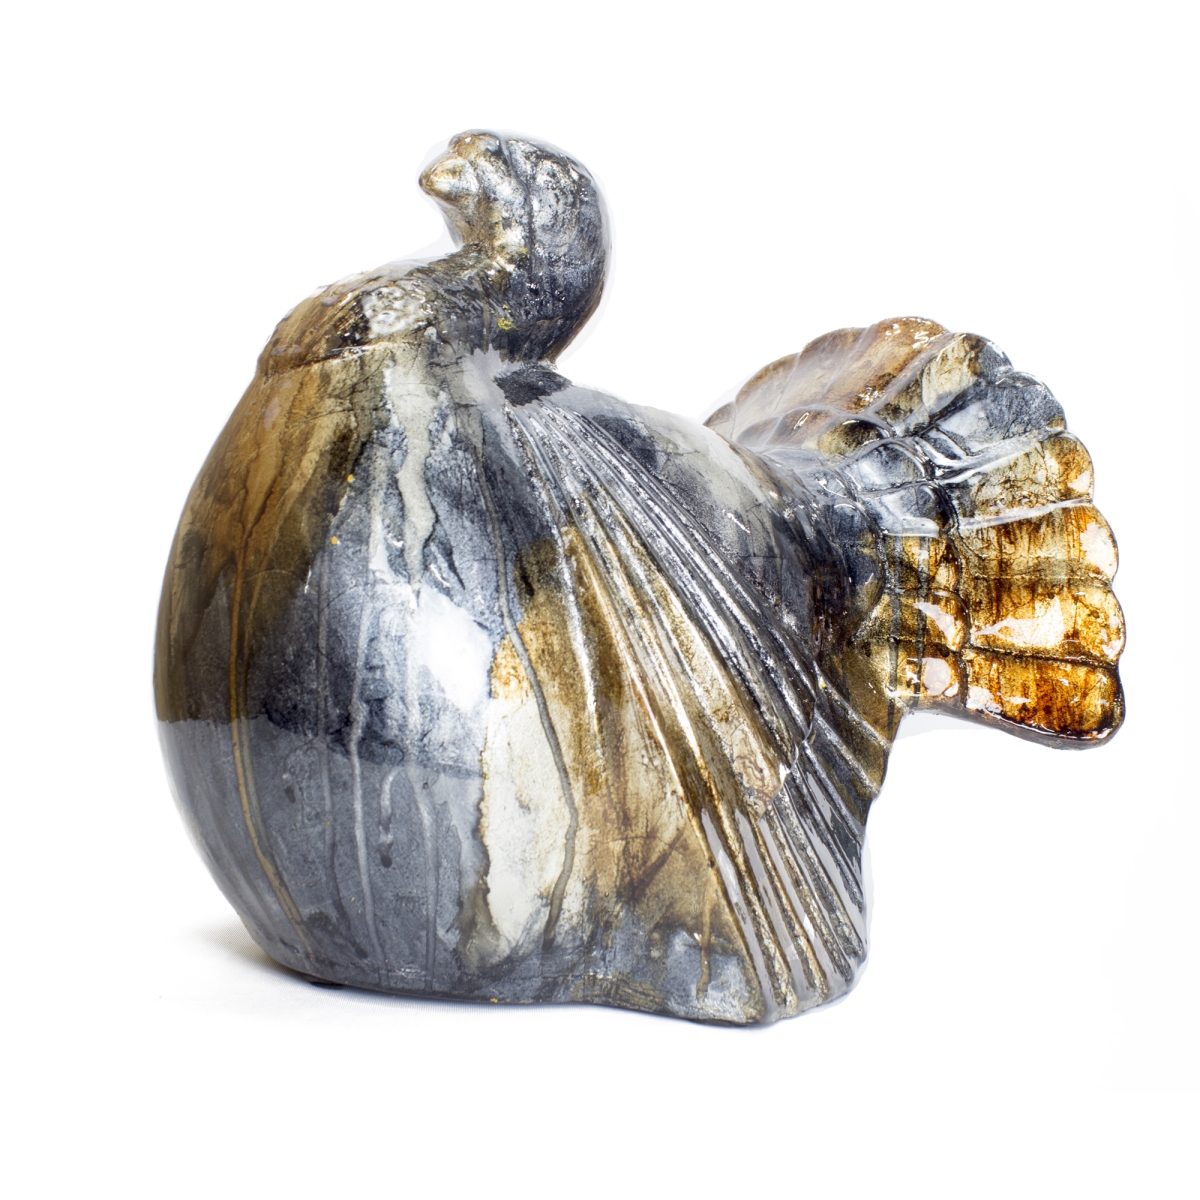 W071372-127 Autumn Foiled & Lacquered Ceramic Turkey Figurine